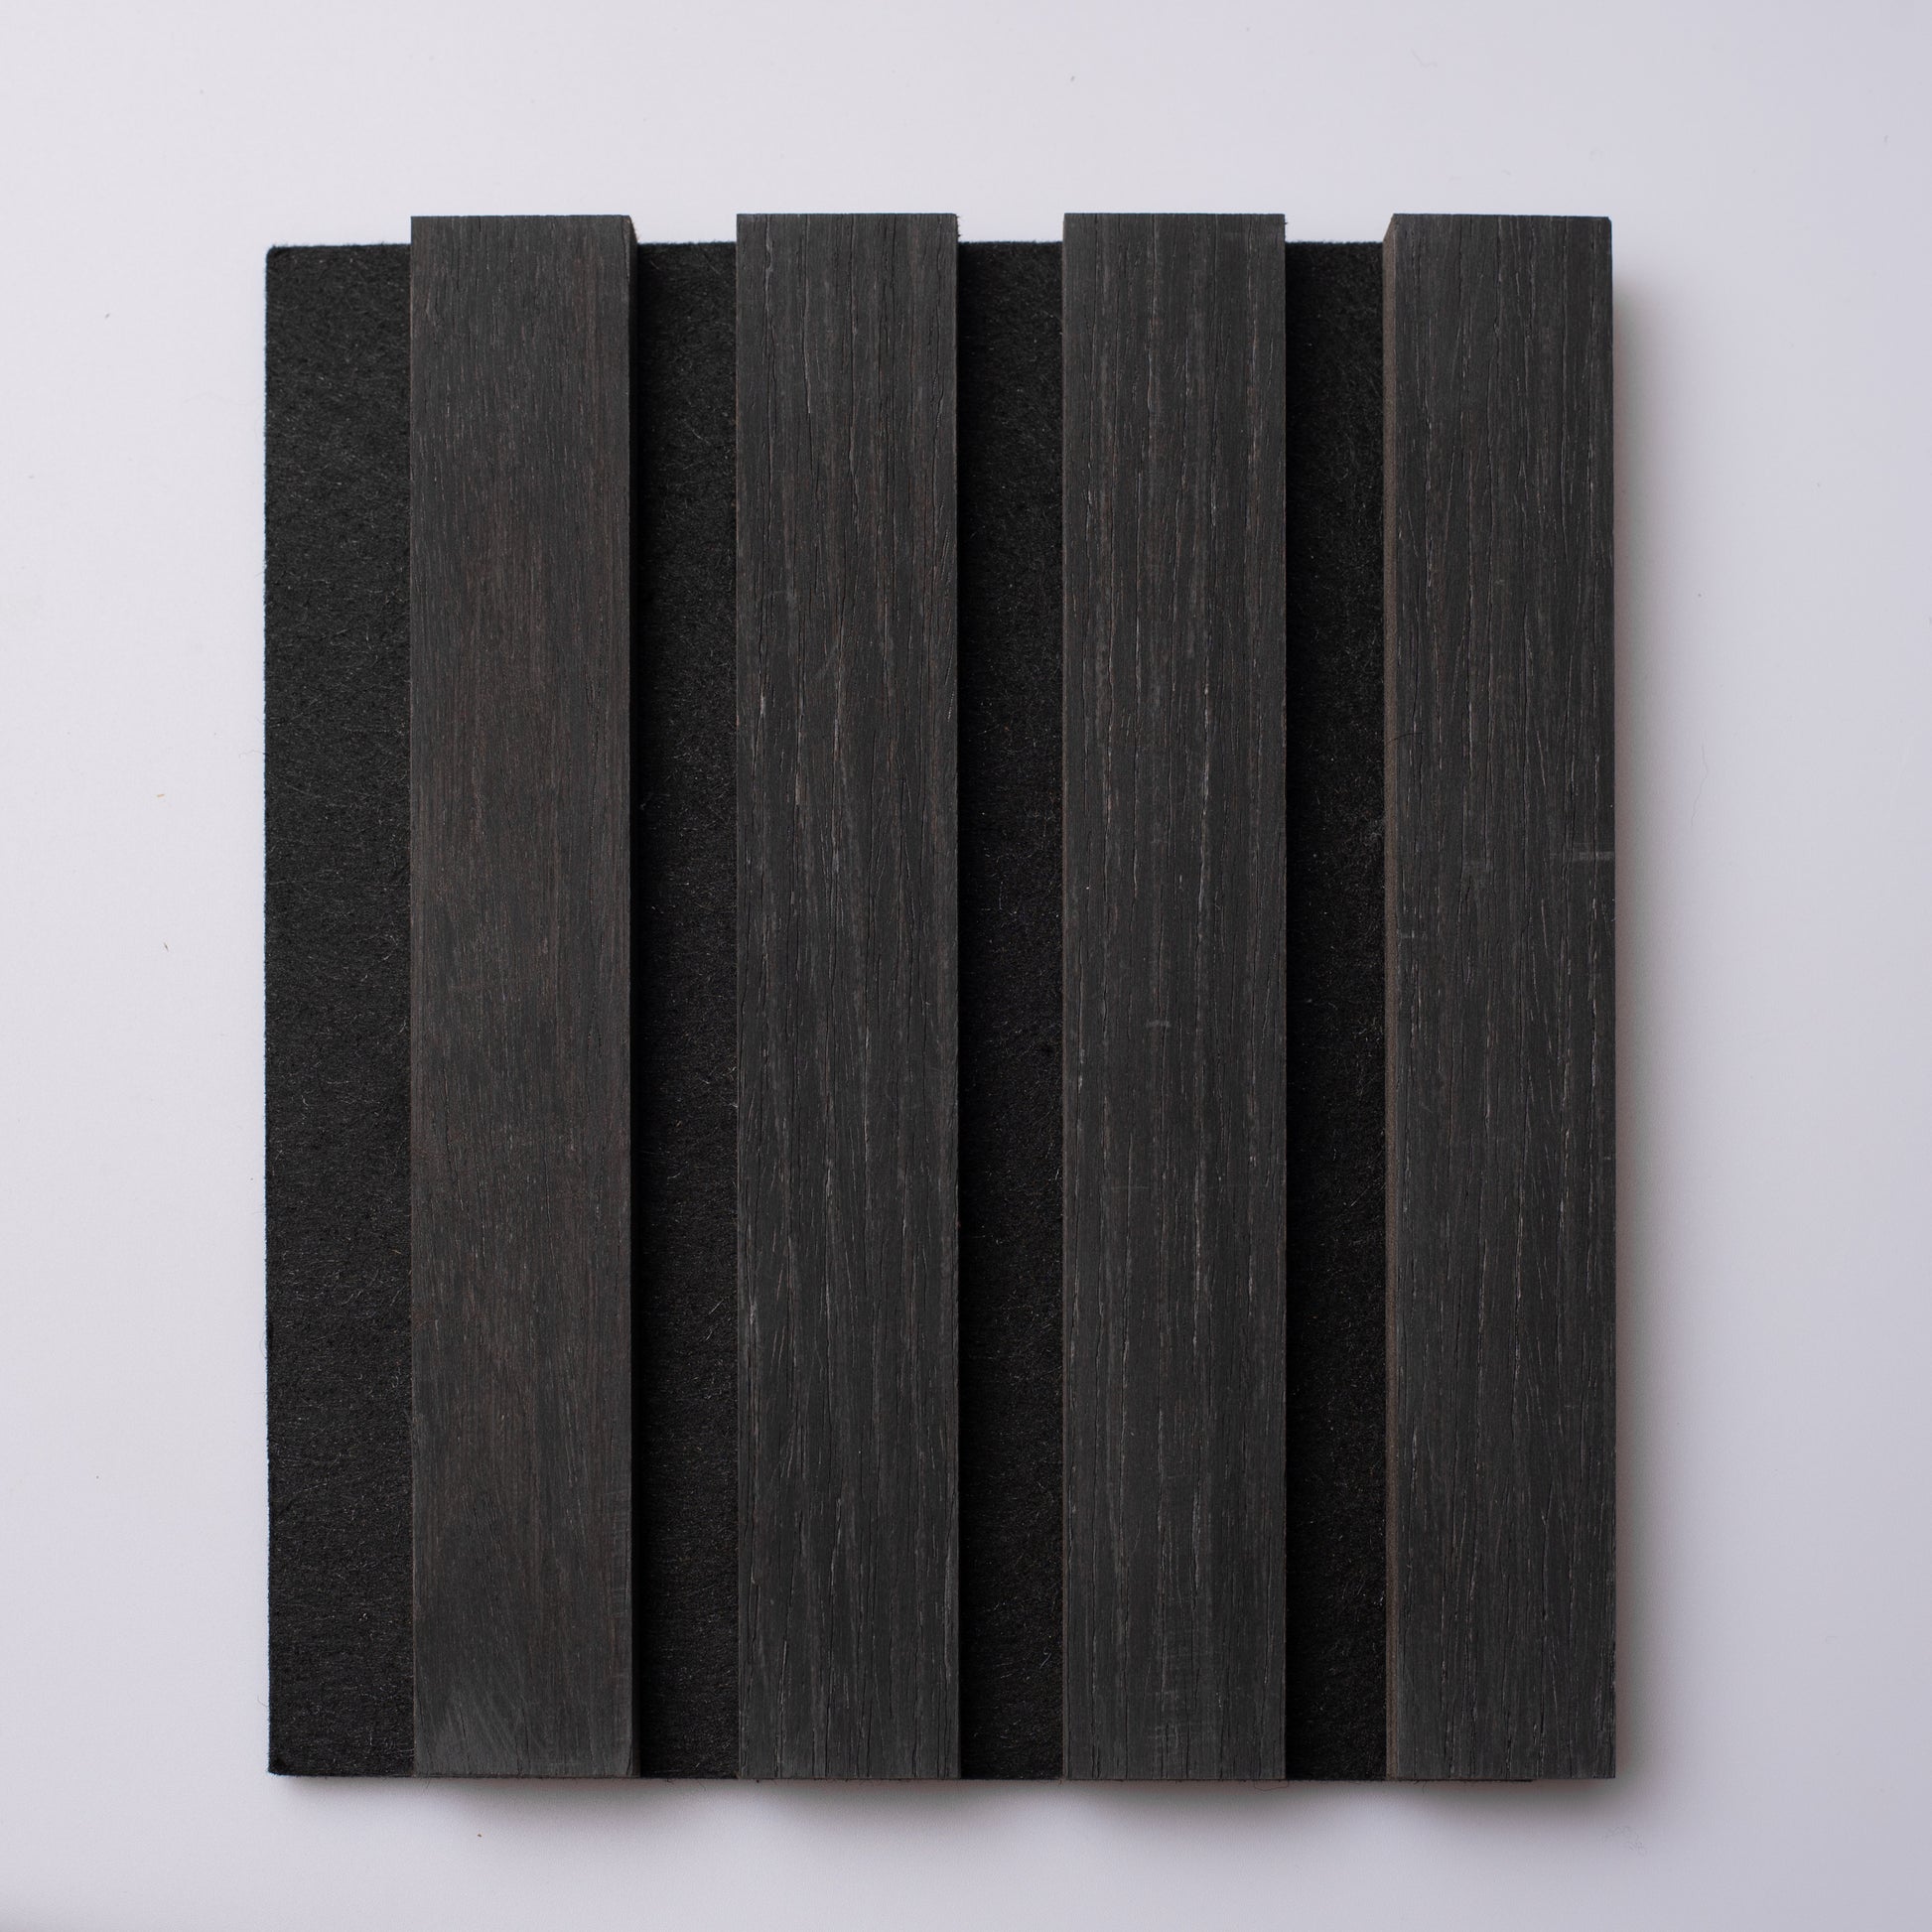 Sample size panel of NüBatten's Charcoal Oak Wood Slat Panel